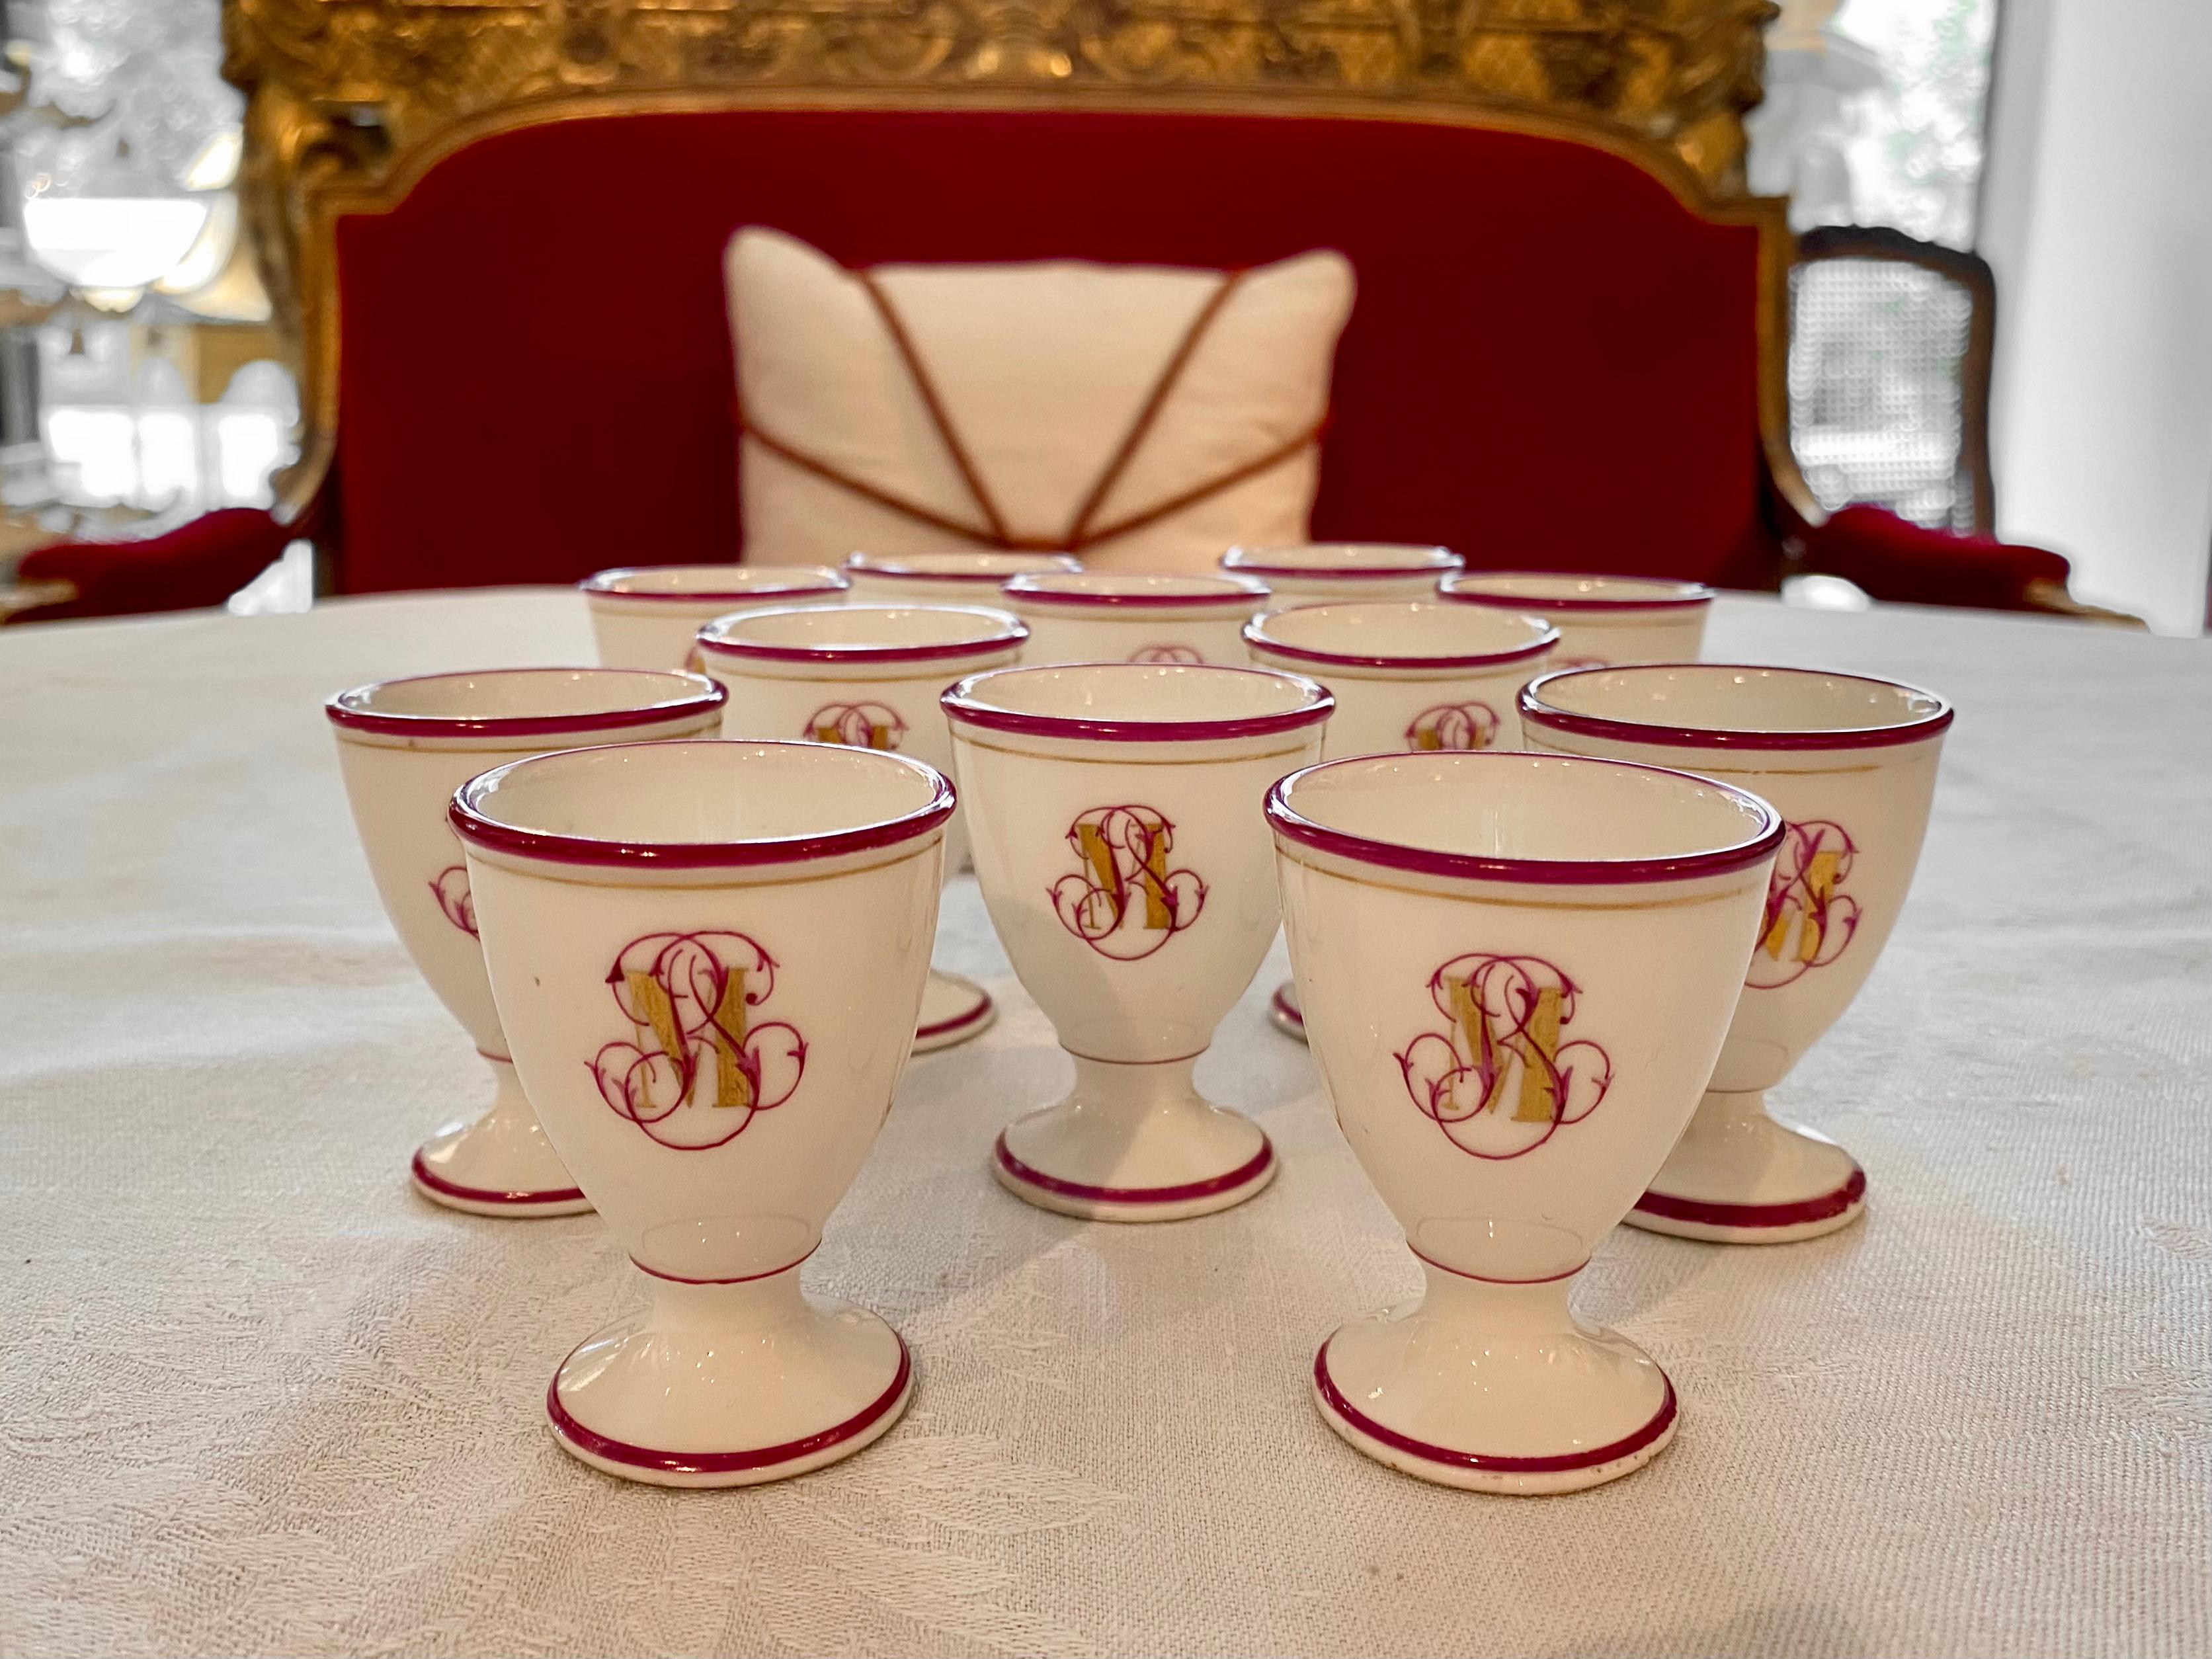 Magnificent French Antique Porcelain 116-Piece Dinner Set, 19th Century For Sale 7